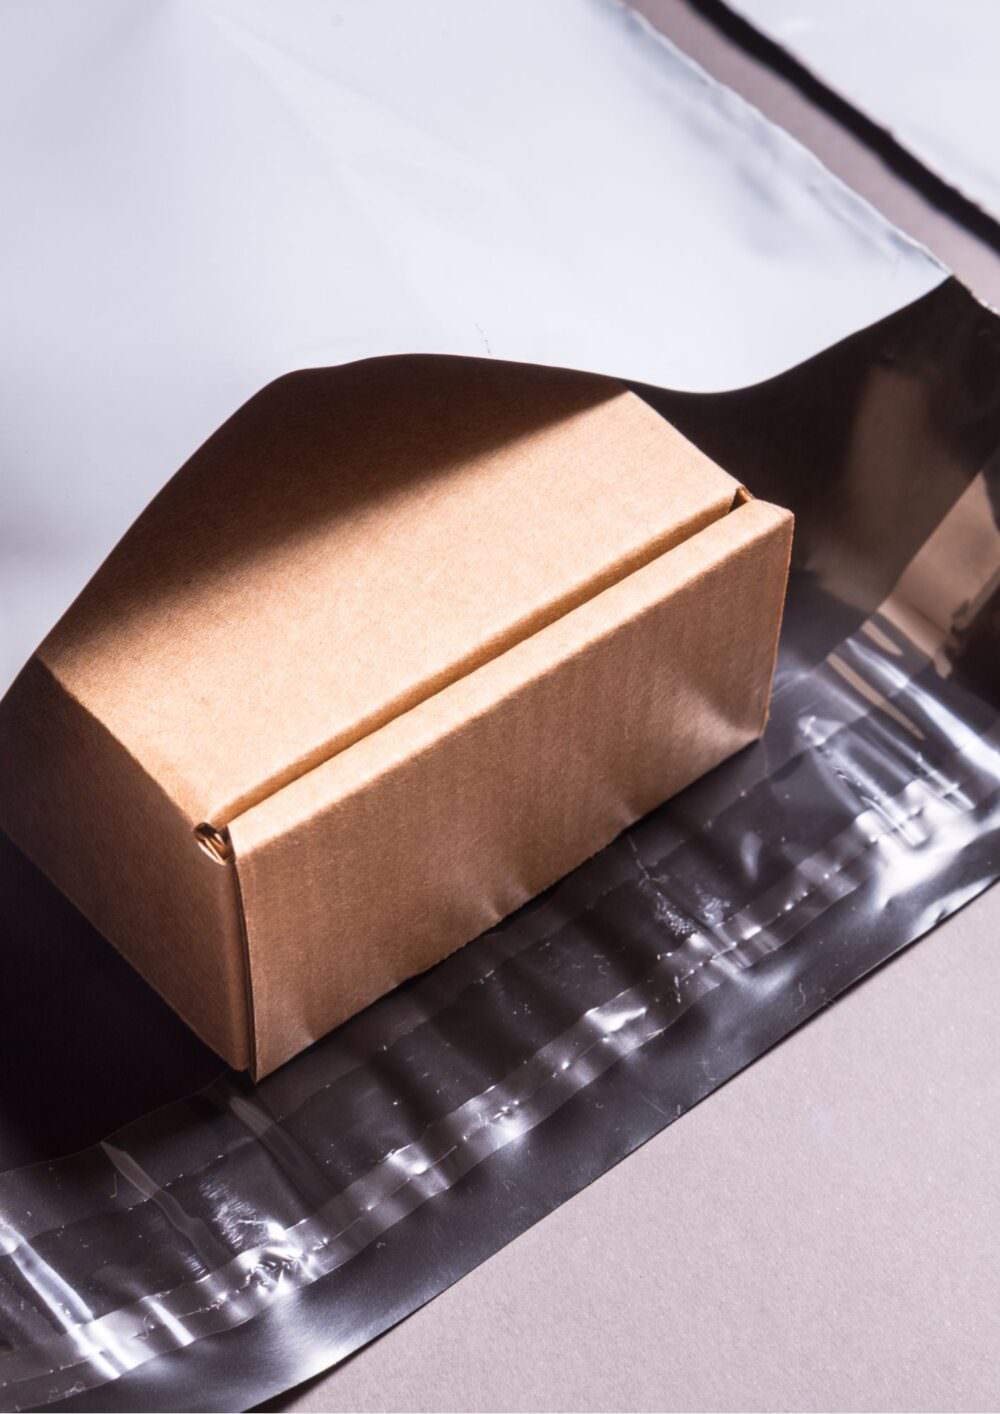 Cardboard box in a white mailing bag